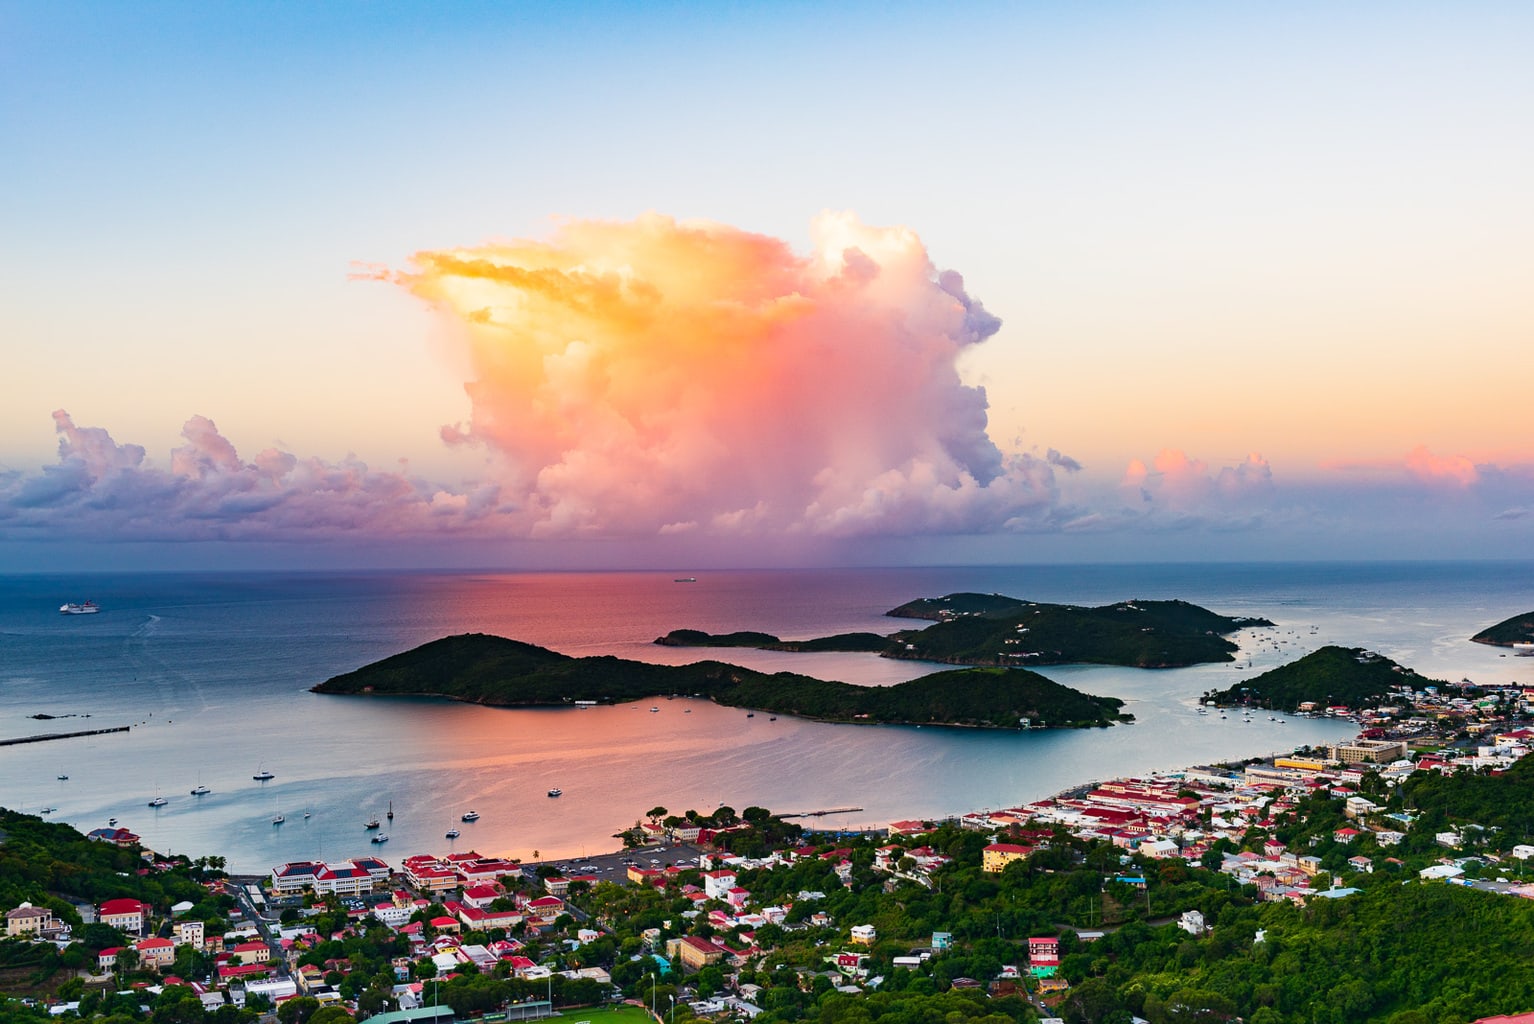 Sunrise over Charlotte Amalie, capital of St. Thomas US Virgin Islands.